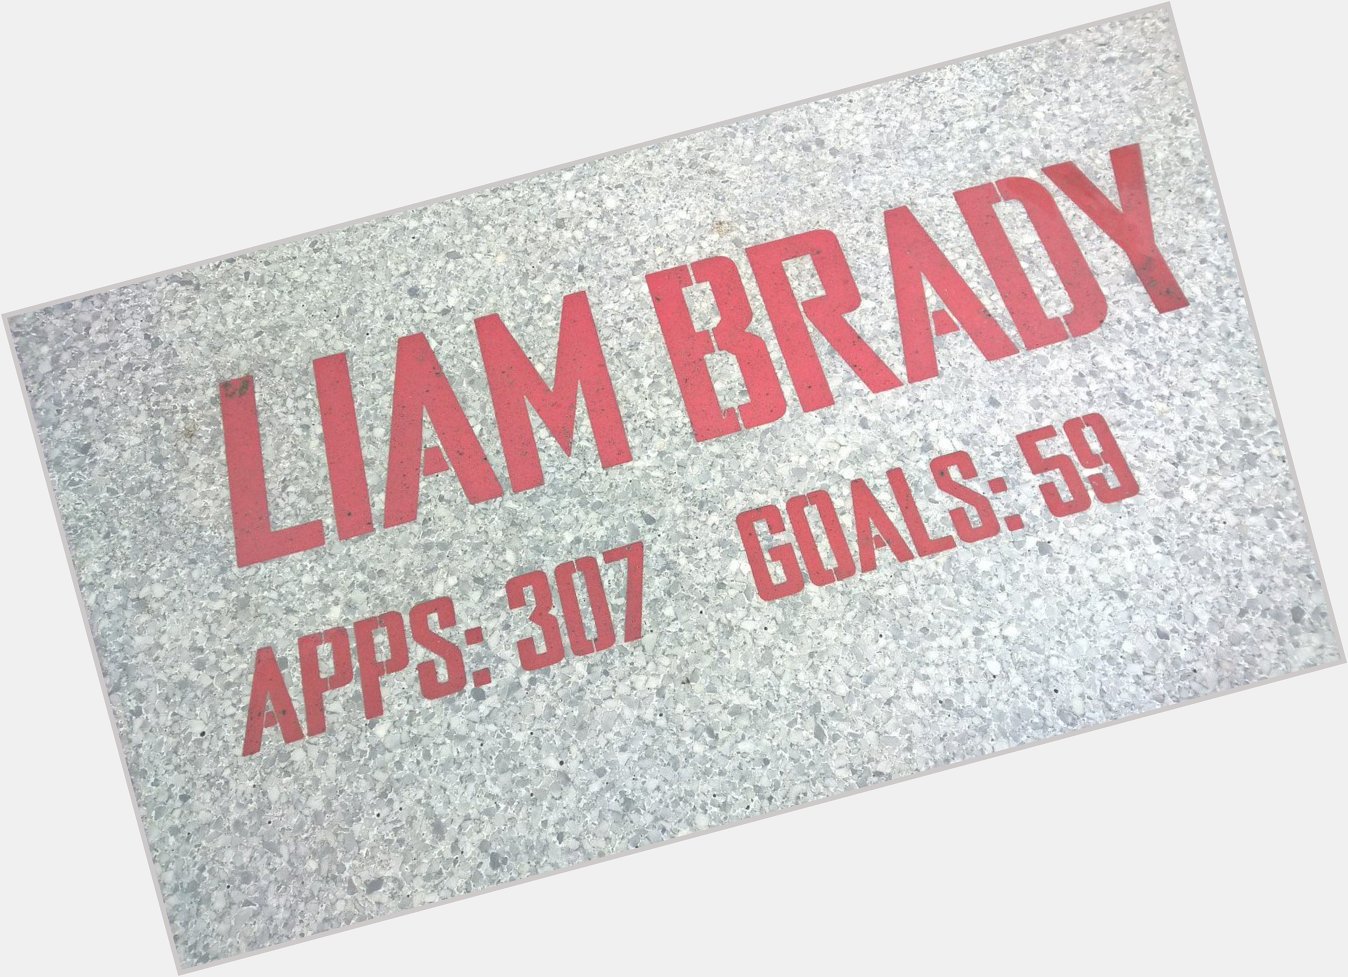  Happy birthday to the legend that is Liam Brady ... maestro     